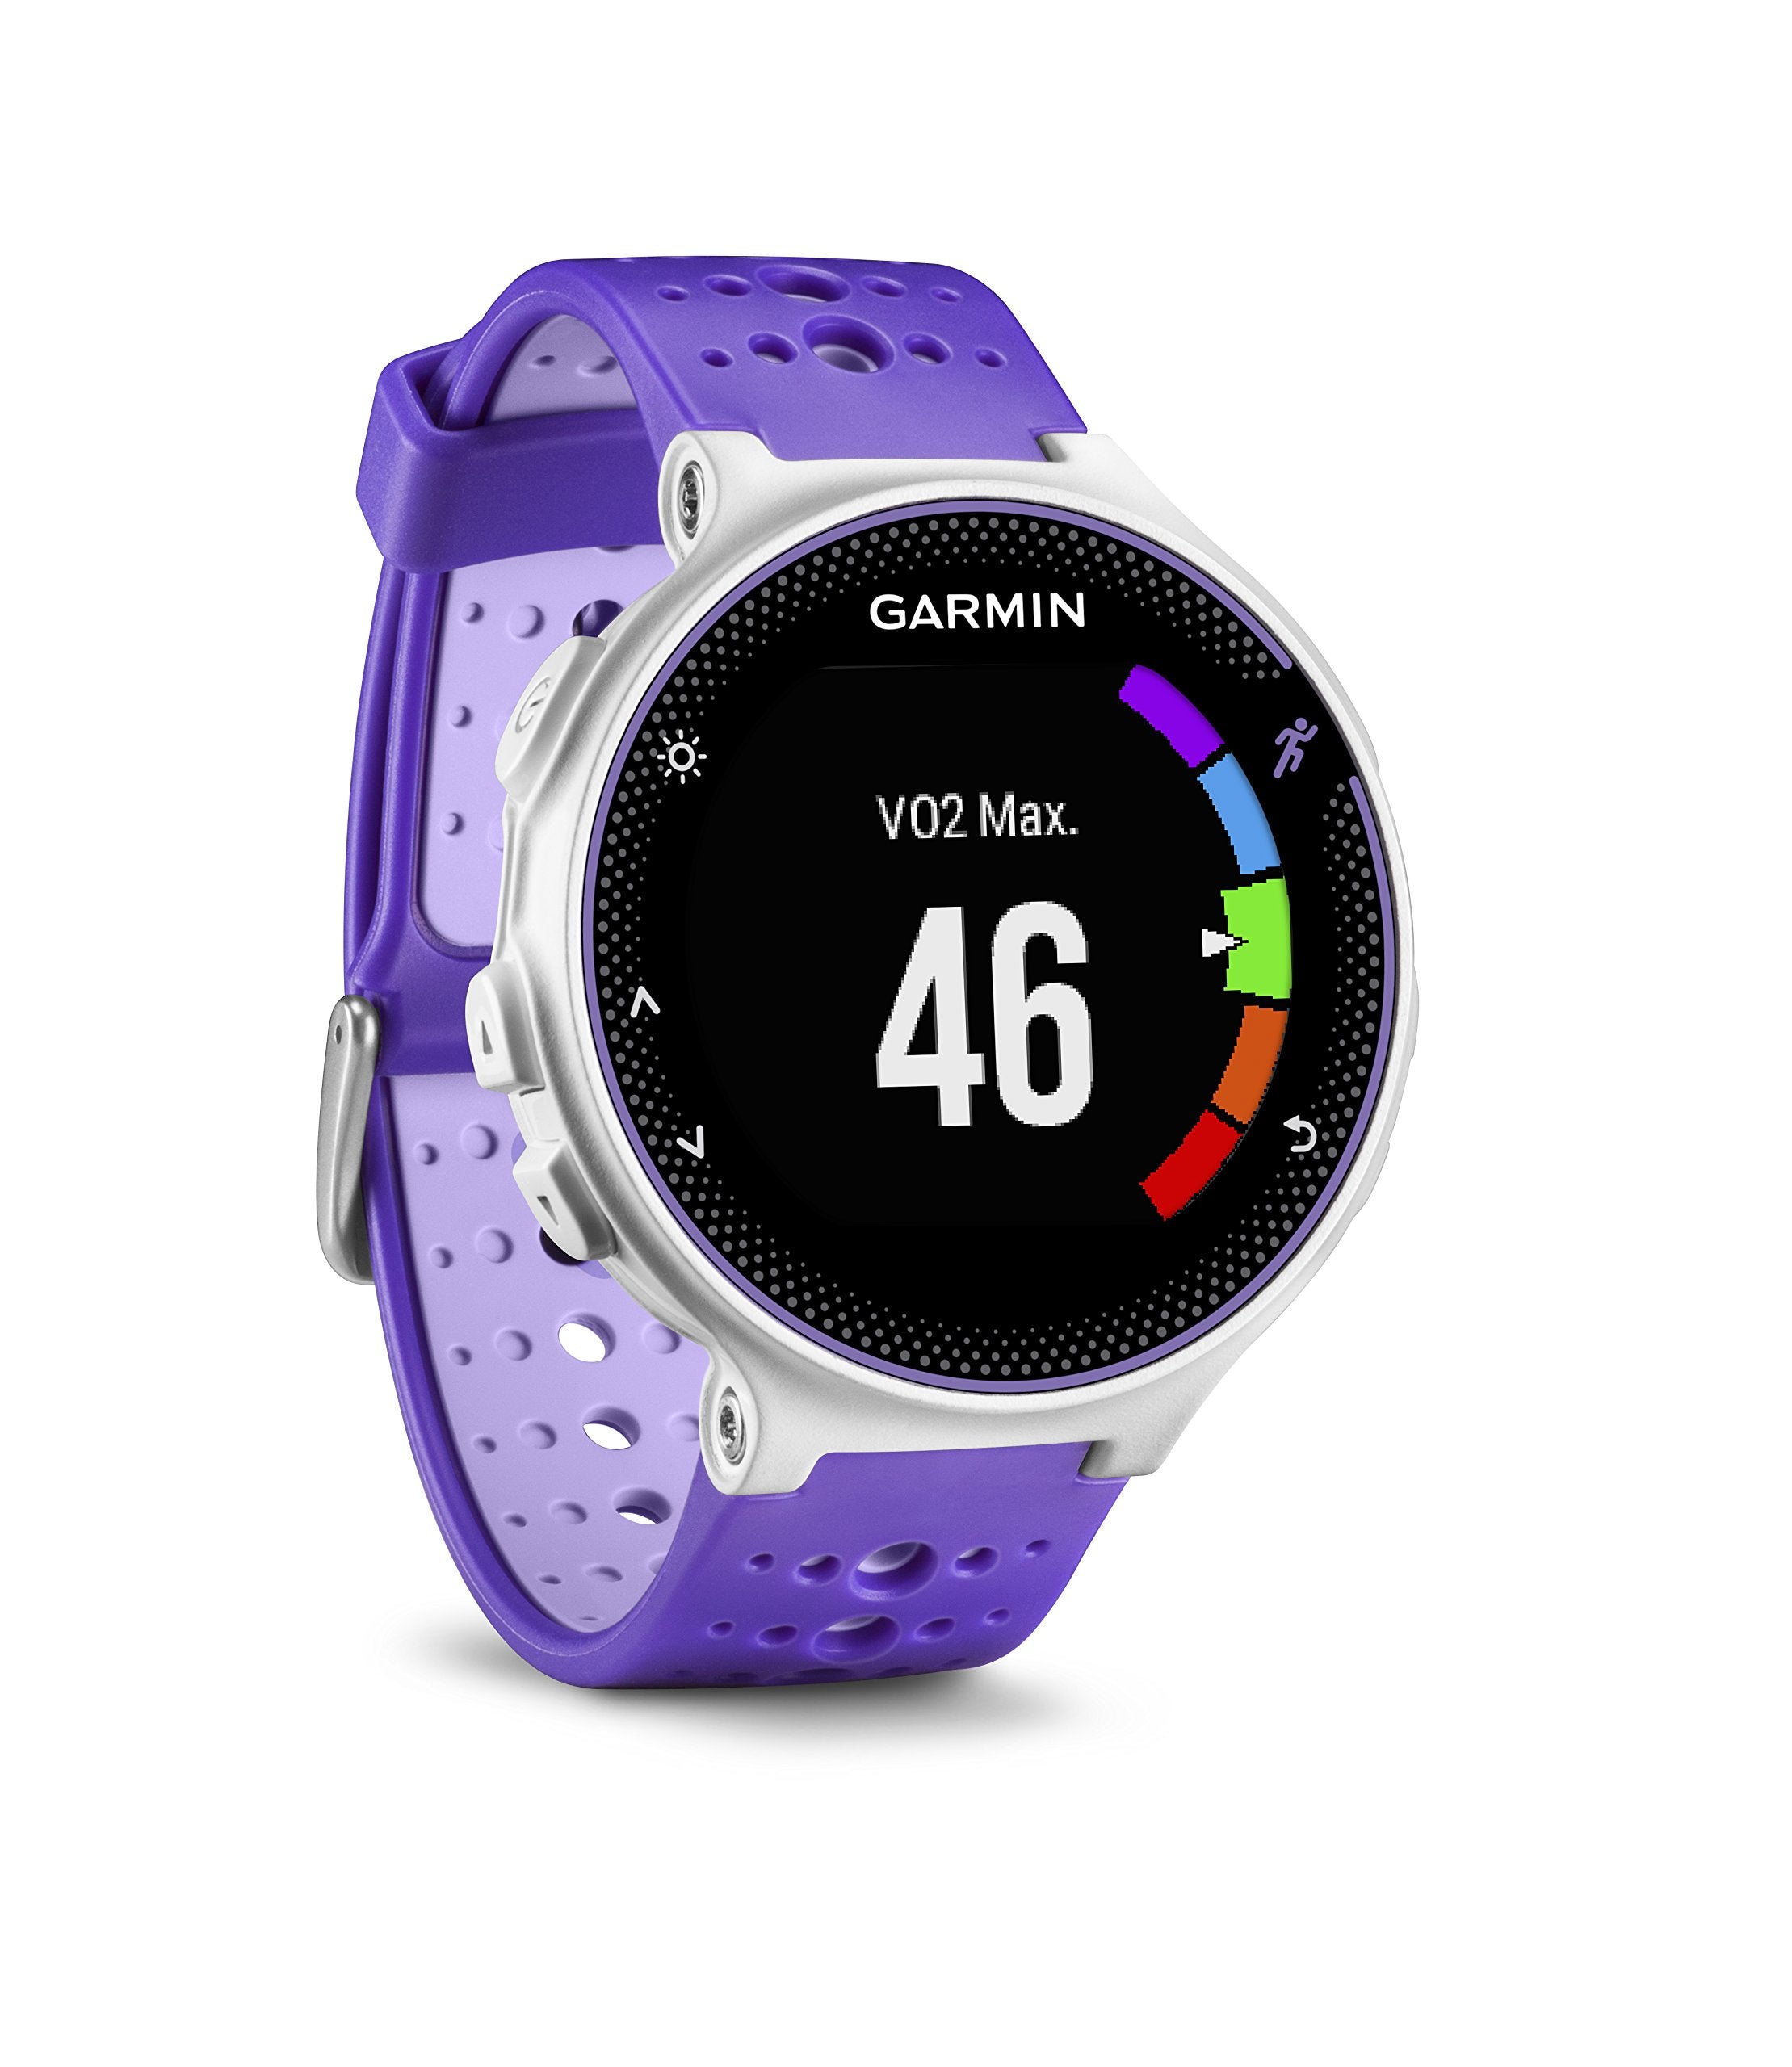 Garmin Forerunner 230 GPS Running Watch - White / Purple